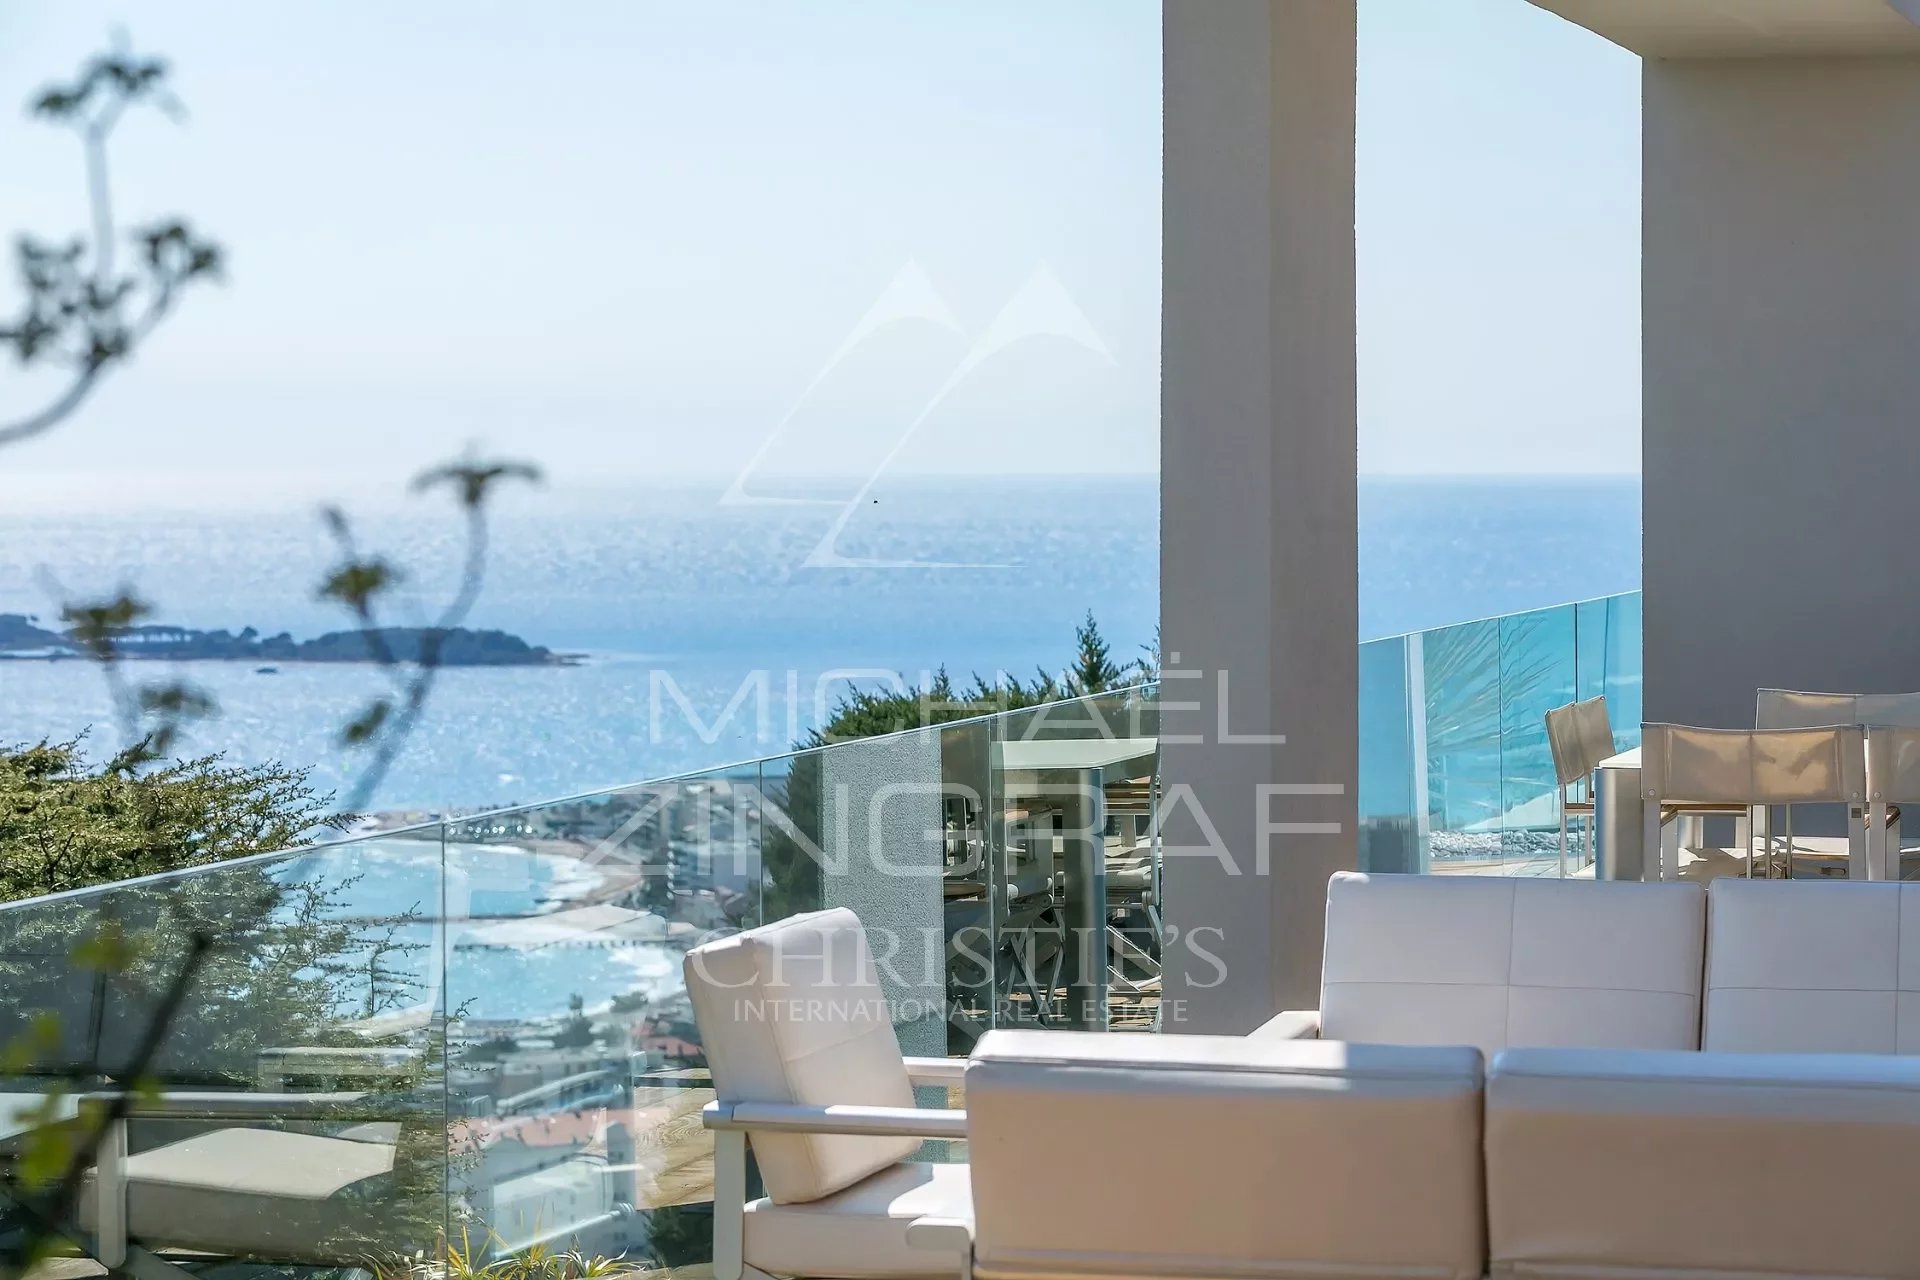 Cannes Californie - Villa contemporaine